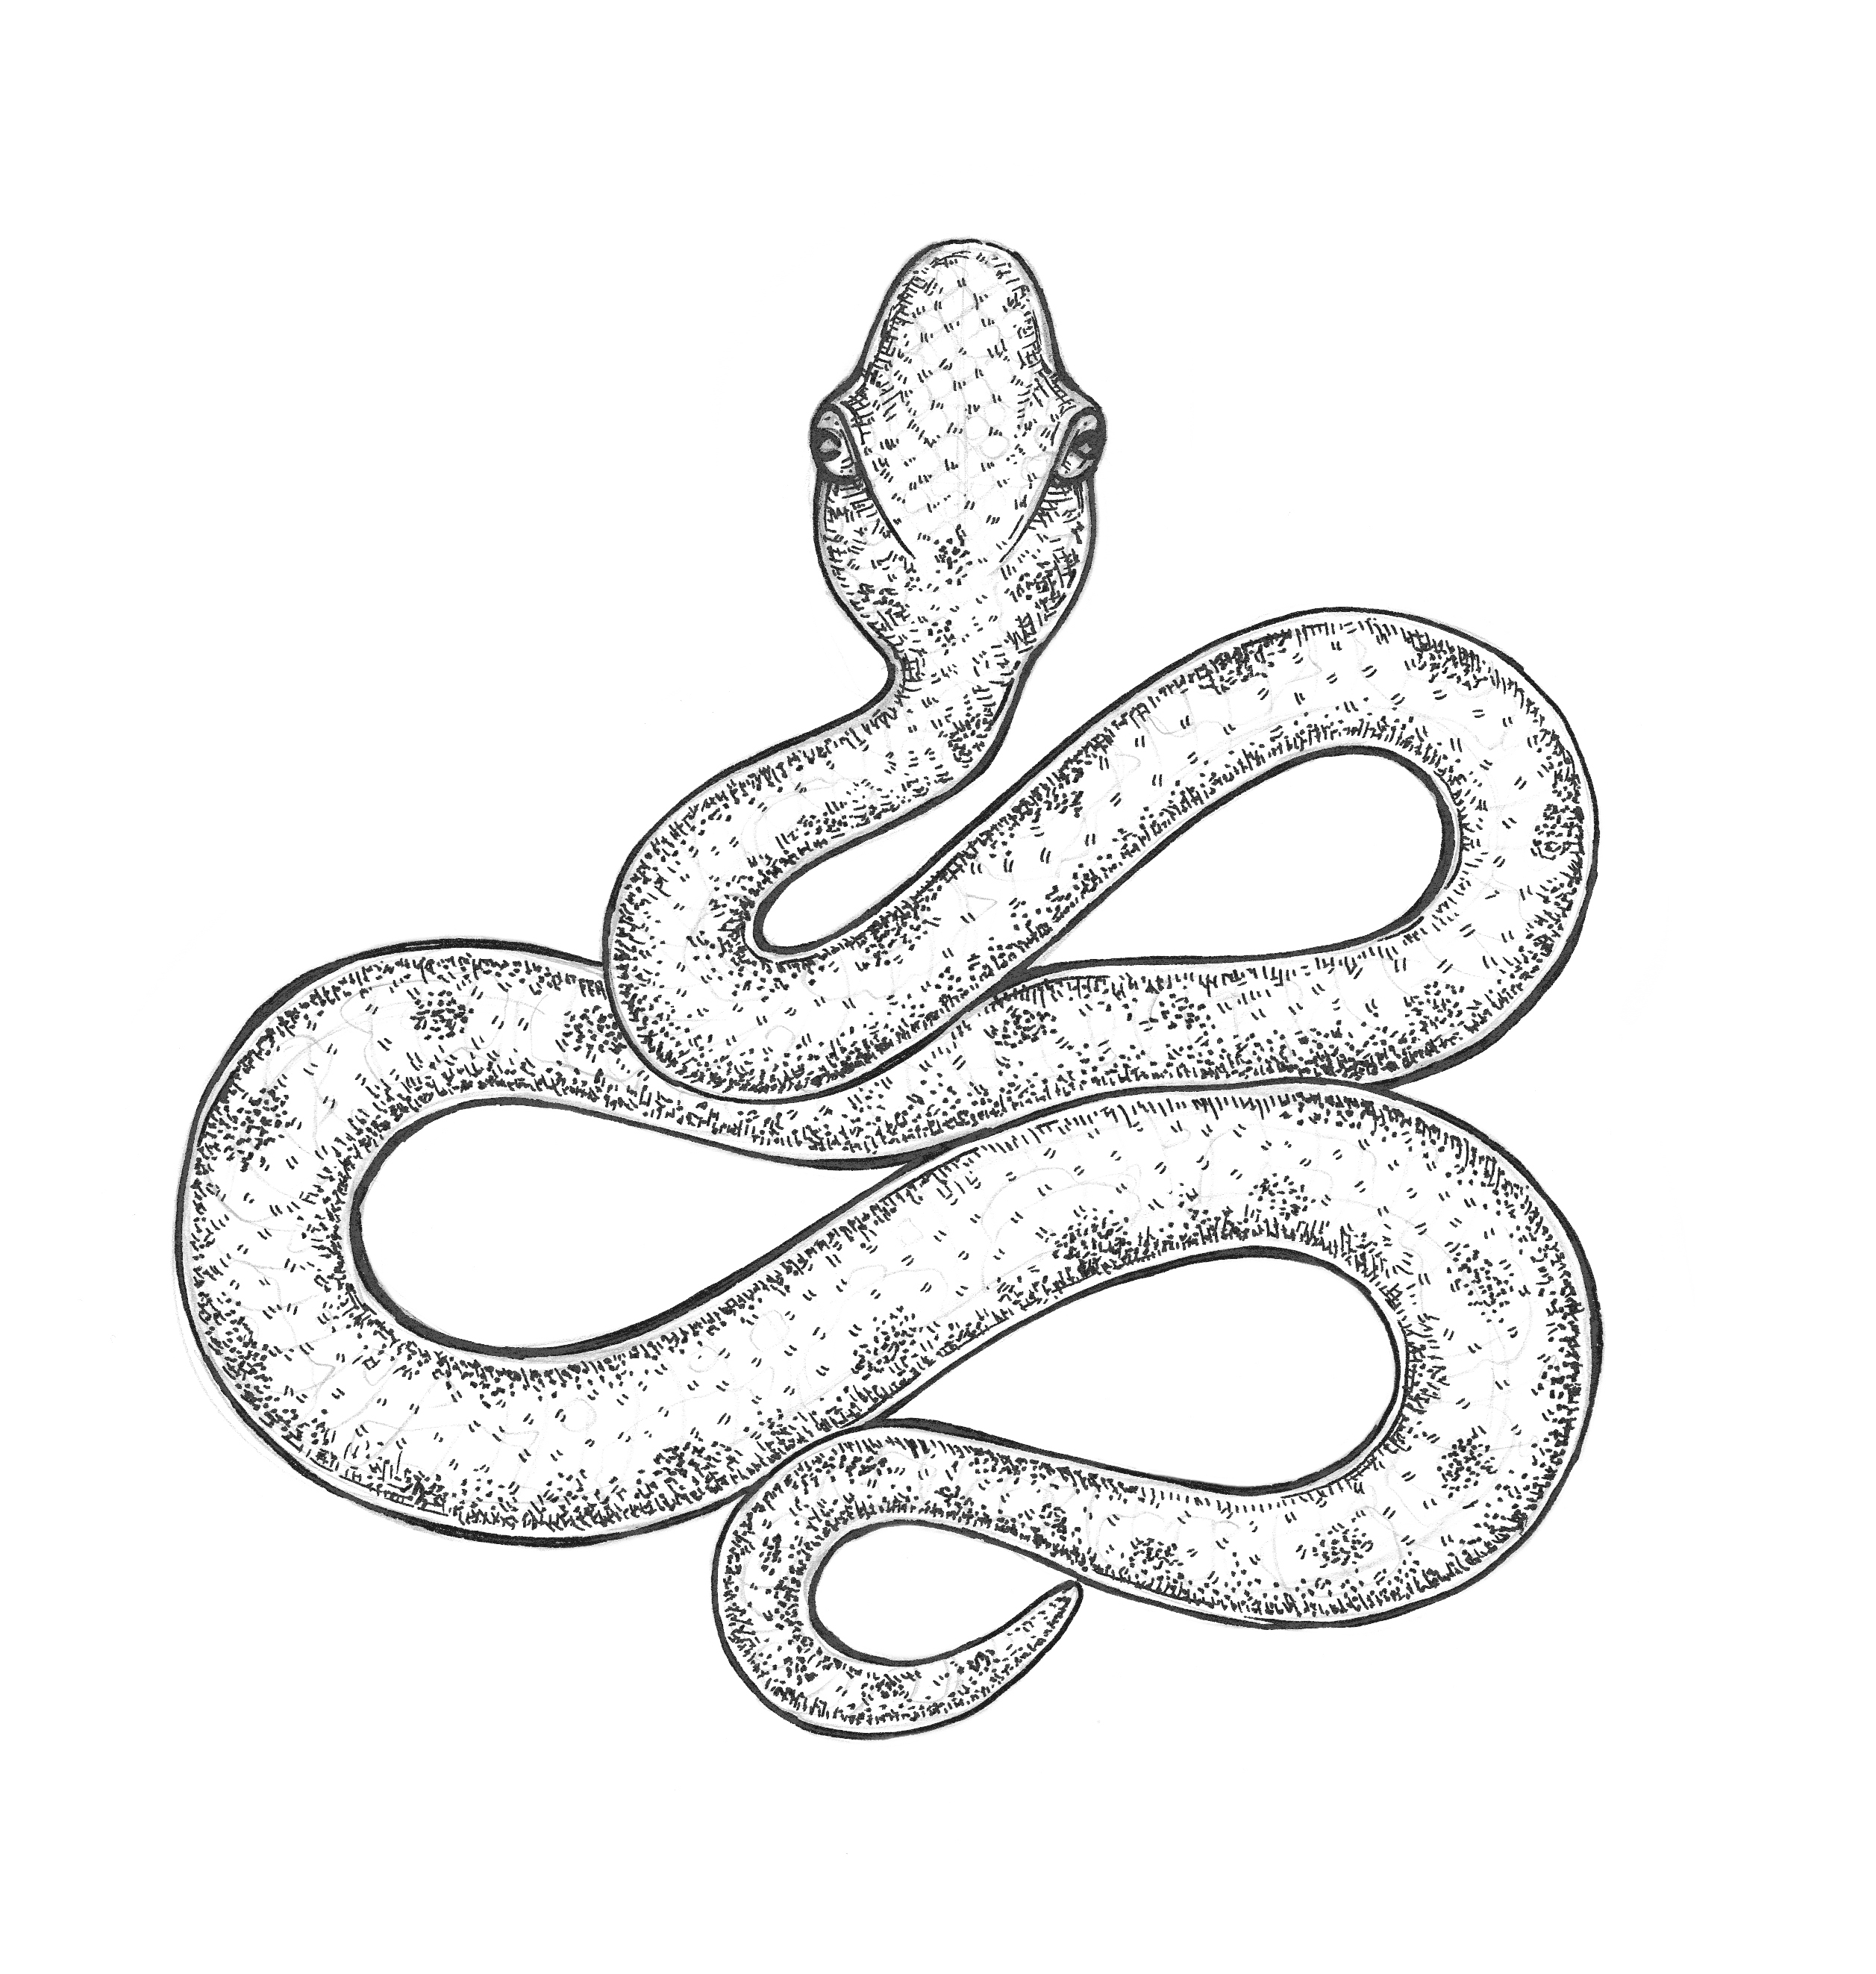 Snake Head Drawing Top View at GetDrawings Free download